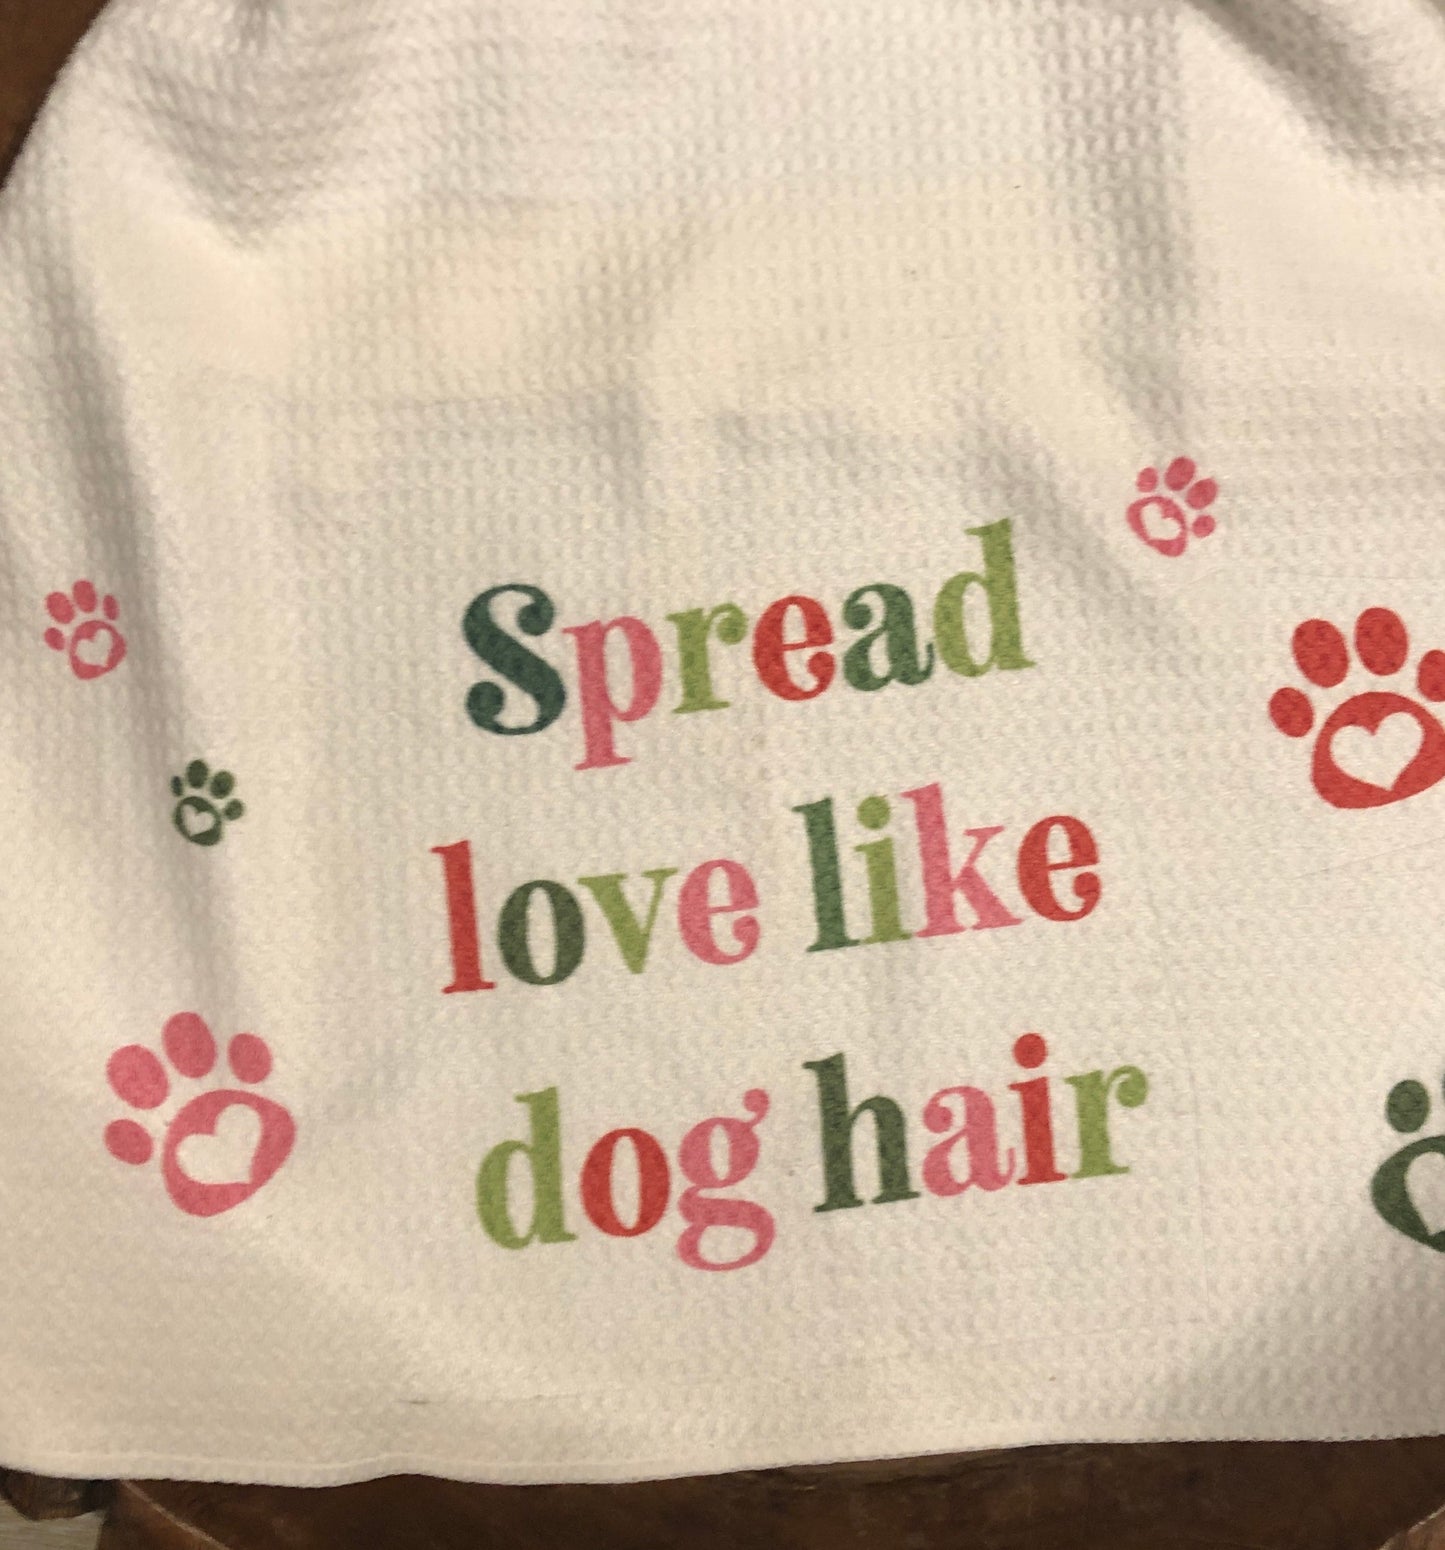 Spread Love like dog hair waffle weave towel, dish towel, golf towel, dog towel